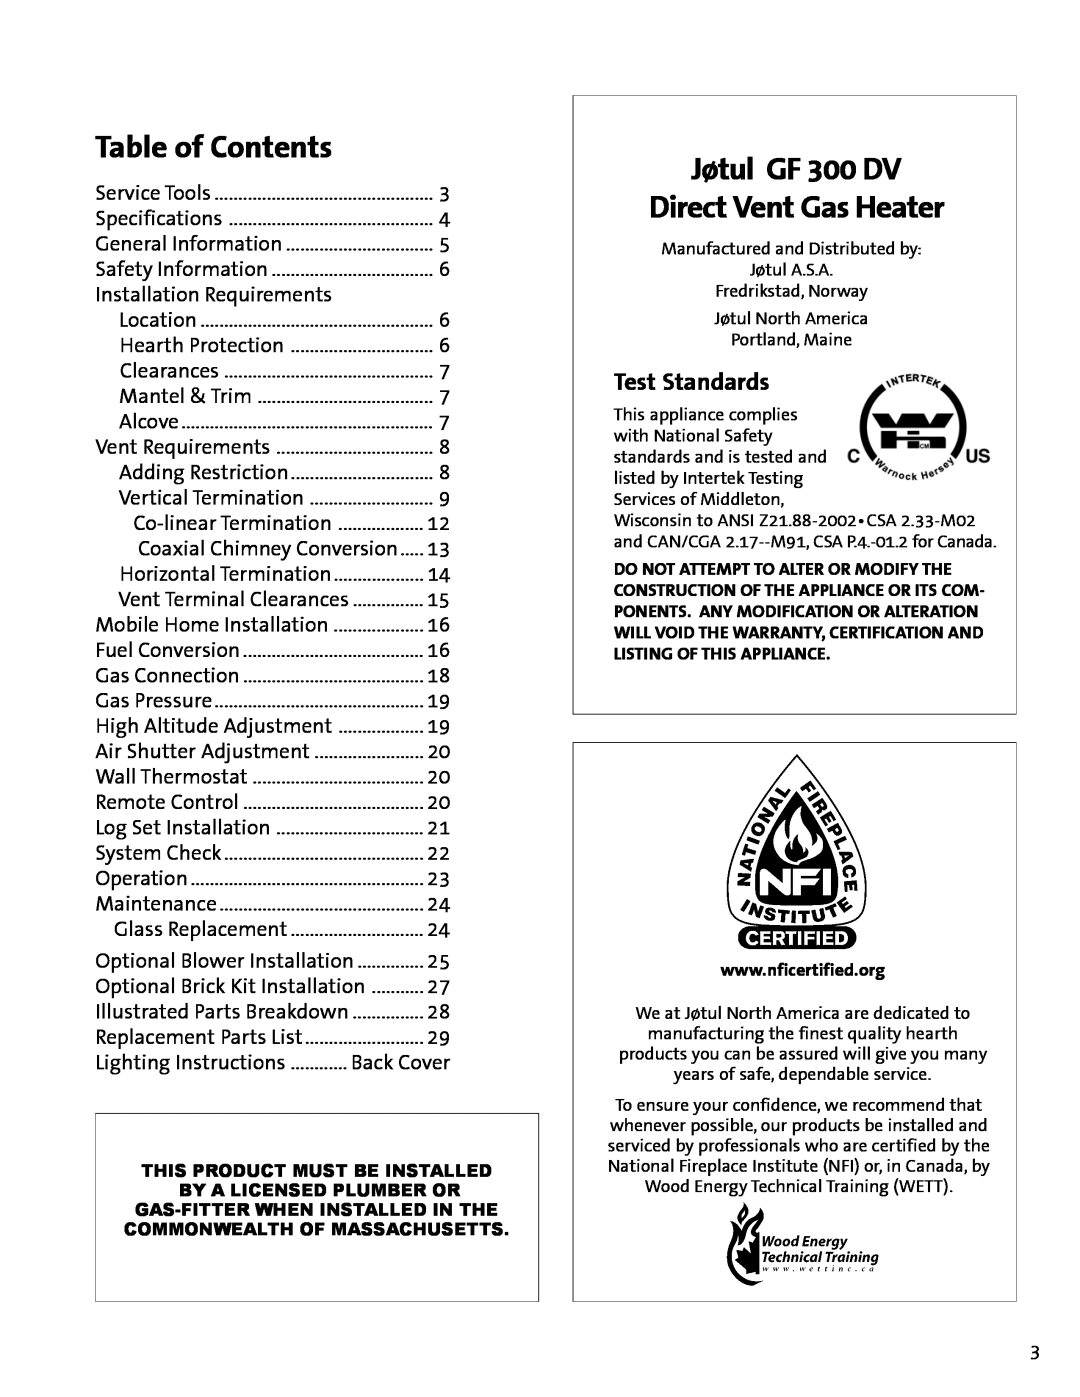 Jotul GF300 DV manual Jøtul GF 300 DV Direct Vent Gas Heater, Table of Contents, Test Standards 